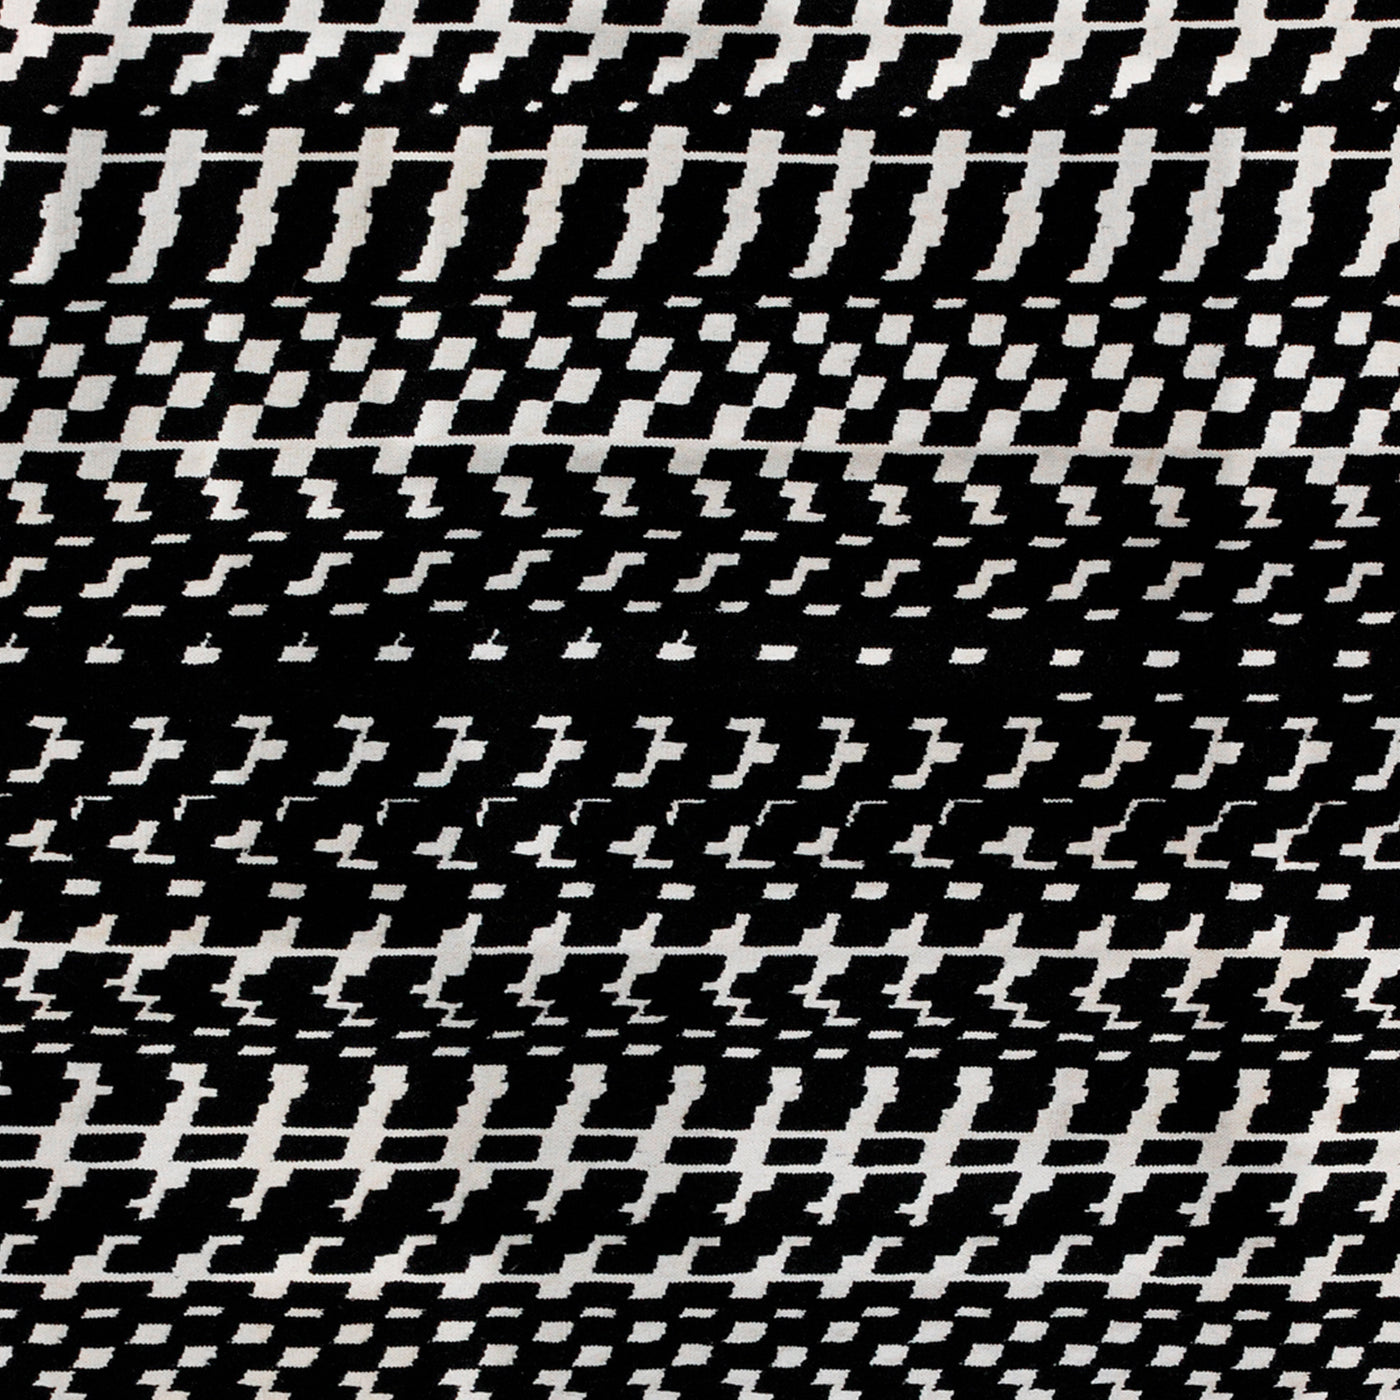 Fuoritempo Kilim Rug Black and White by Paolo Giordano e Nicole Jeanneret - Alternative view 1